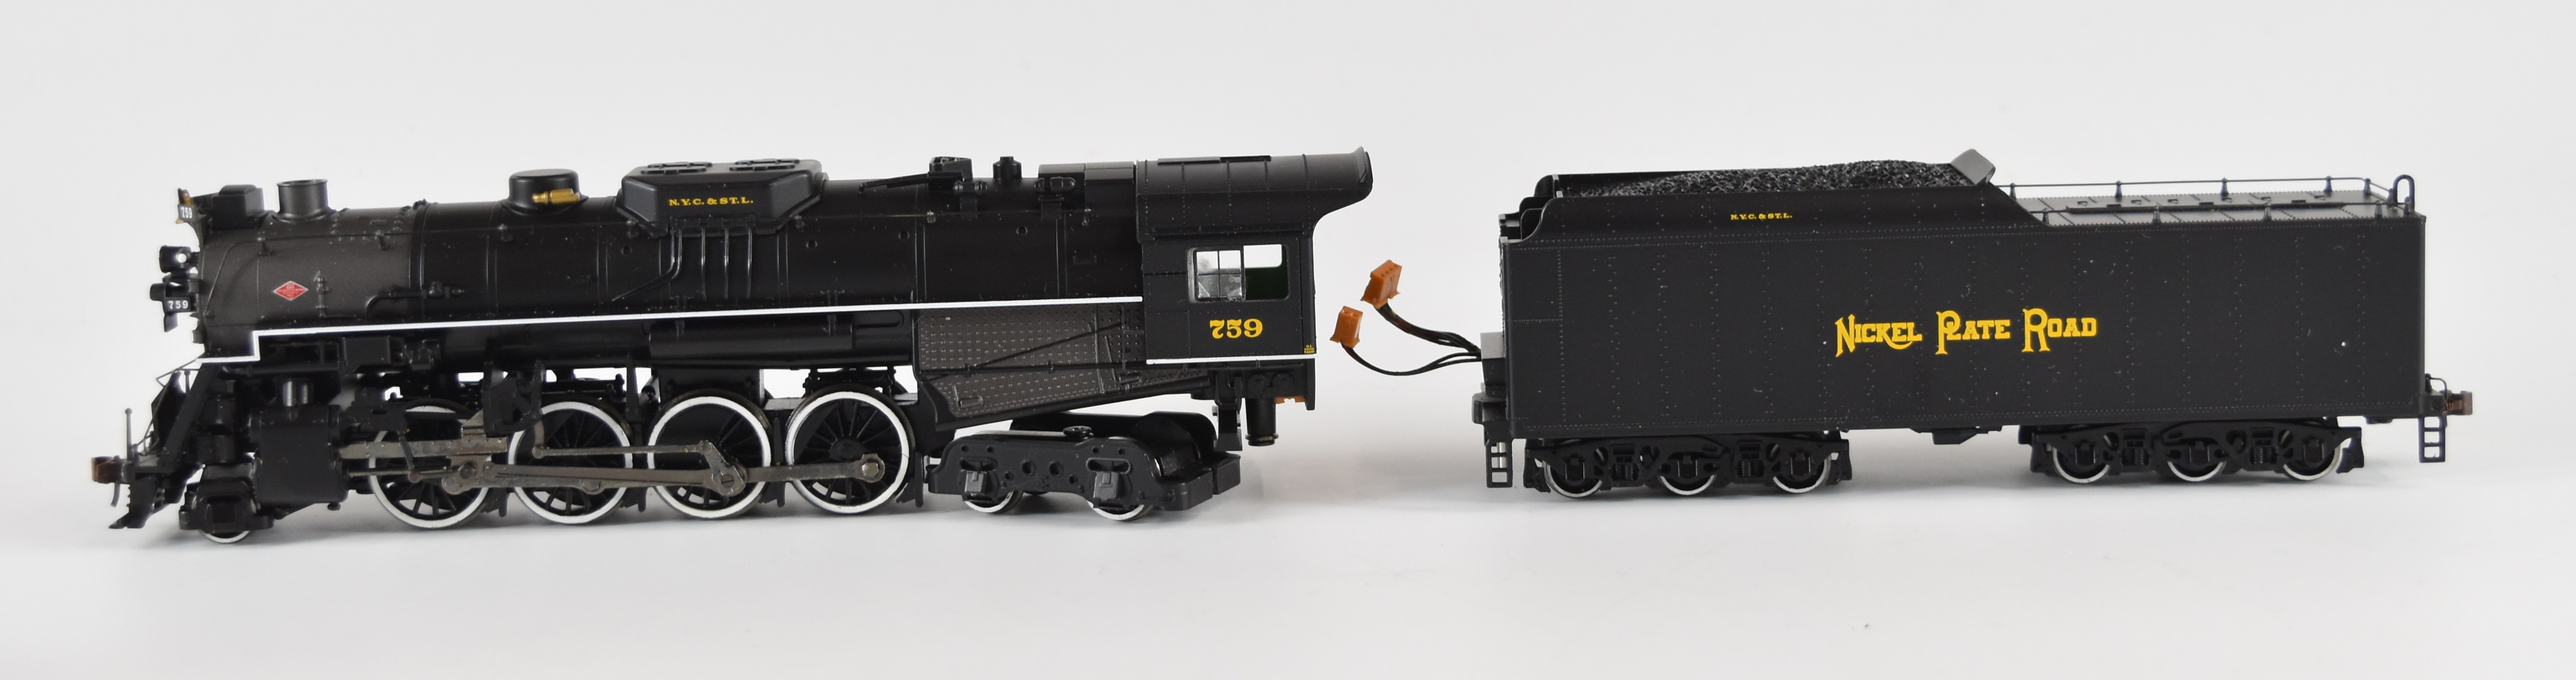 Bachmann 00 gauge HO model railway American Nickel Plate Railroad DCC locomotive, in original box - Image 2 of 4